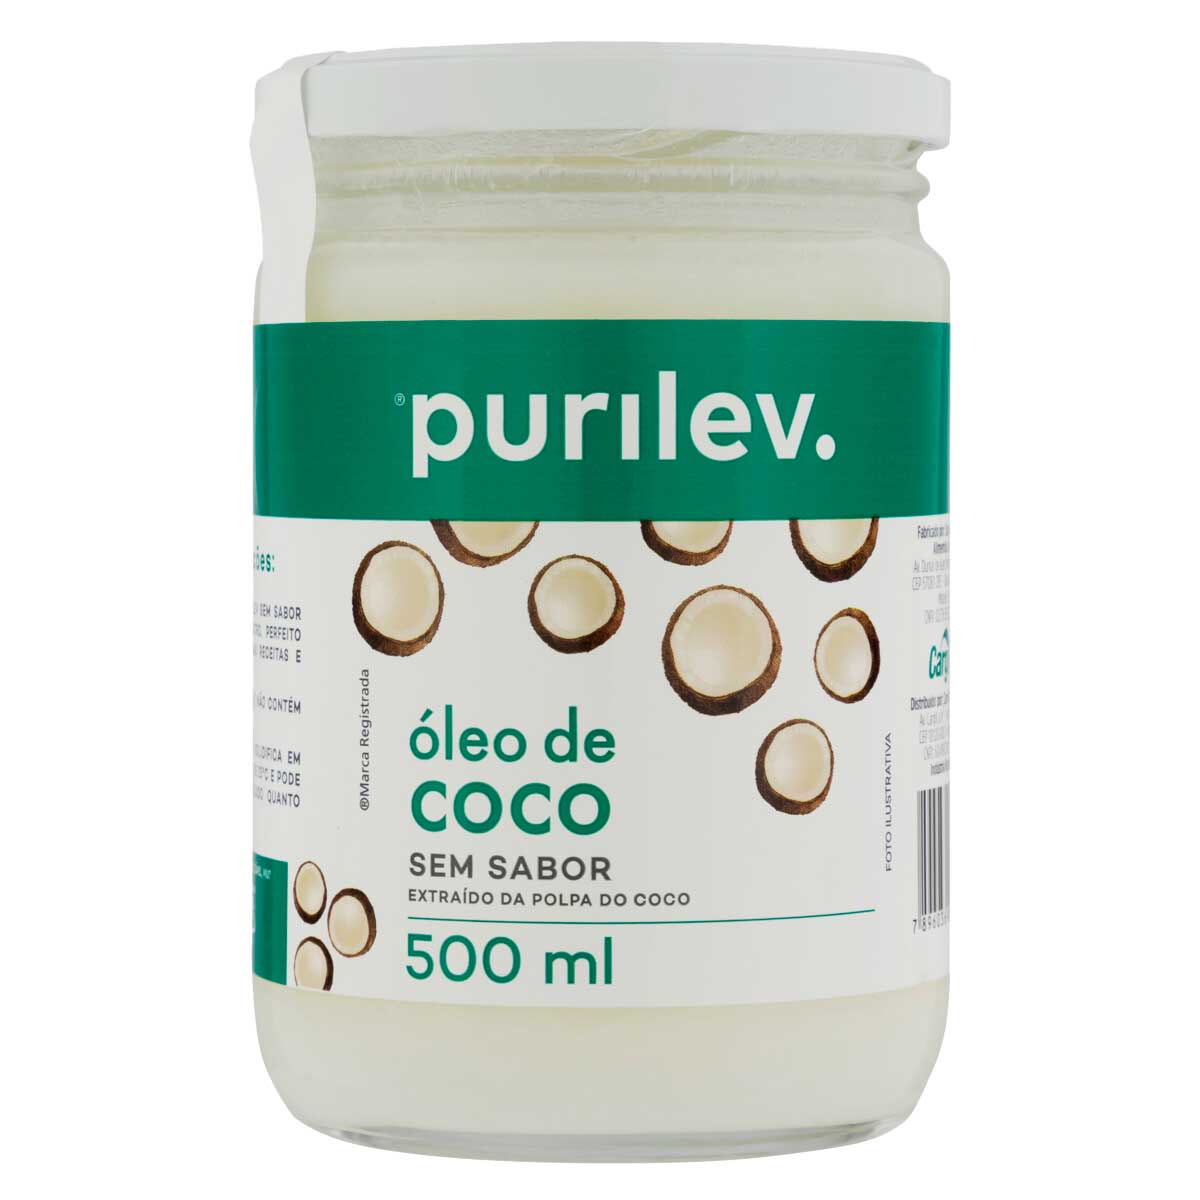 oleo-de-coco-sem-sabor-purilev-vidro-500-ml-1.jpg